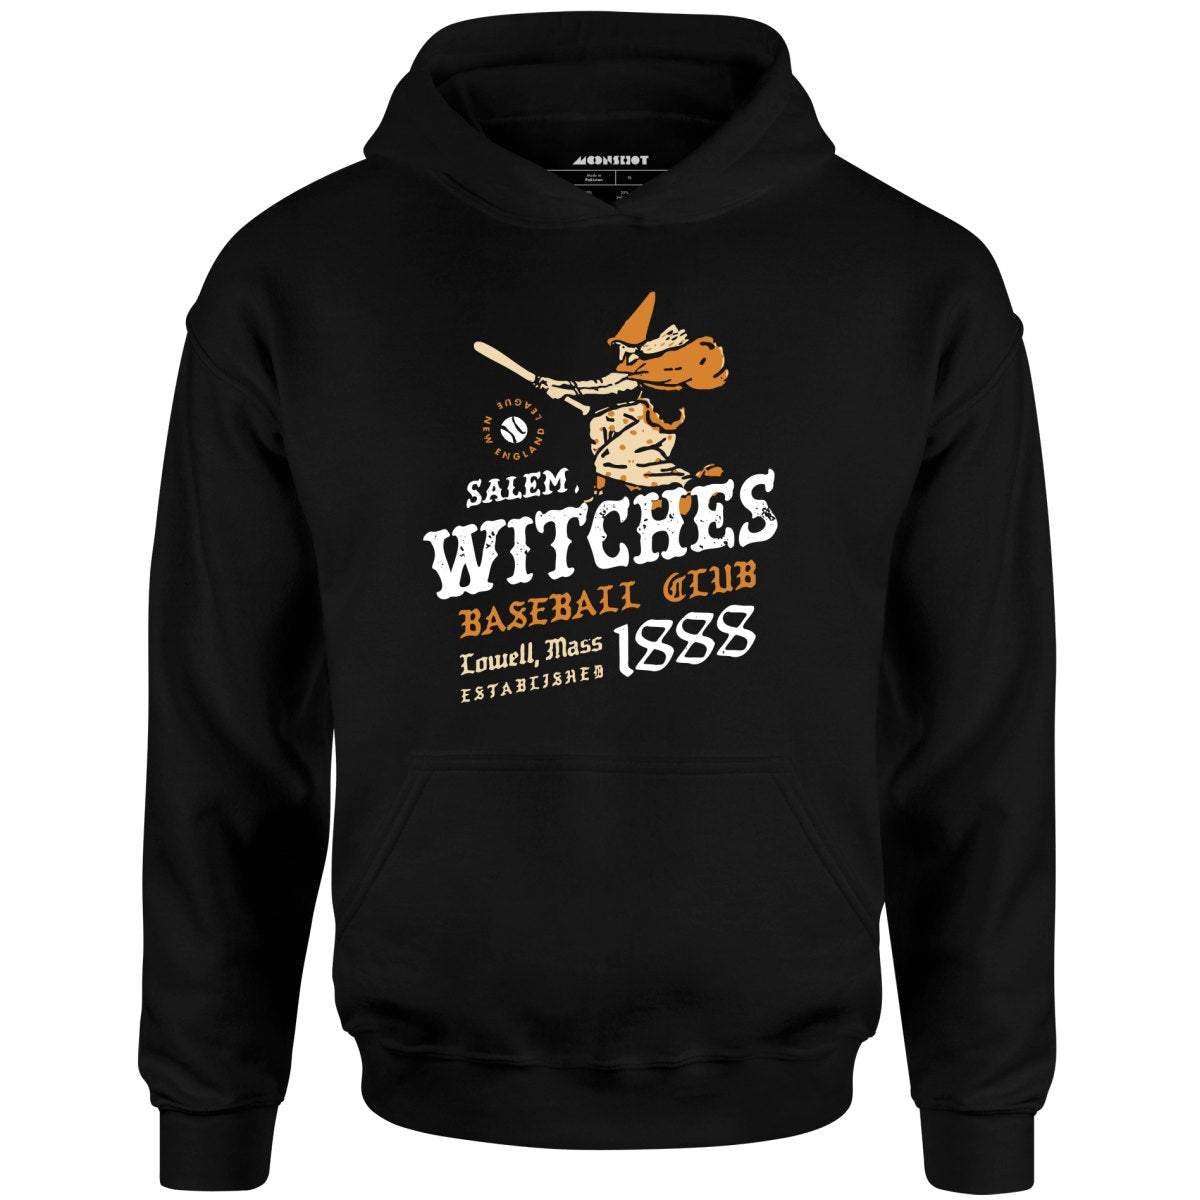 Salem Witches - Massachusetts - Vintage Defunct Baseball Teams - Unisex Hoodie